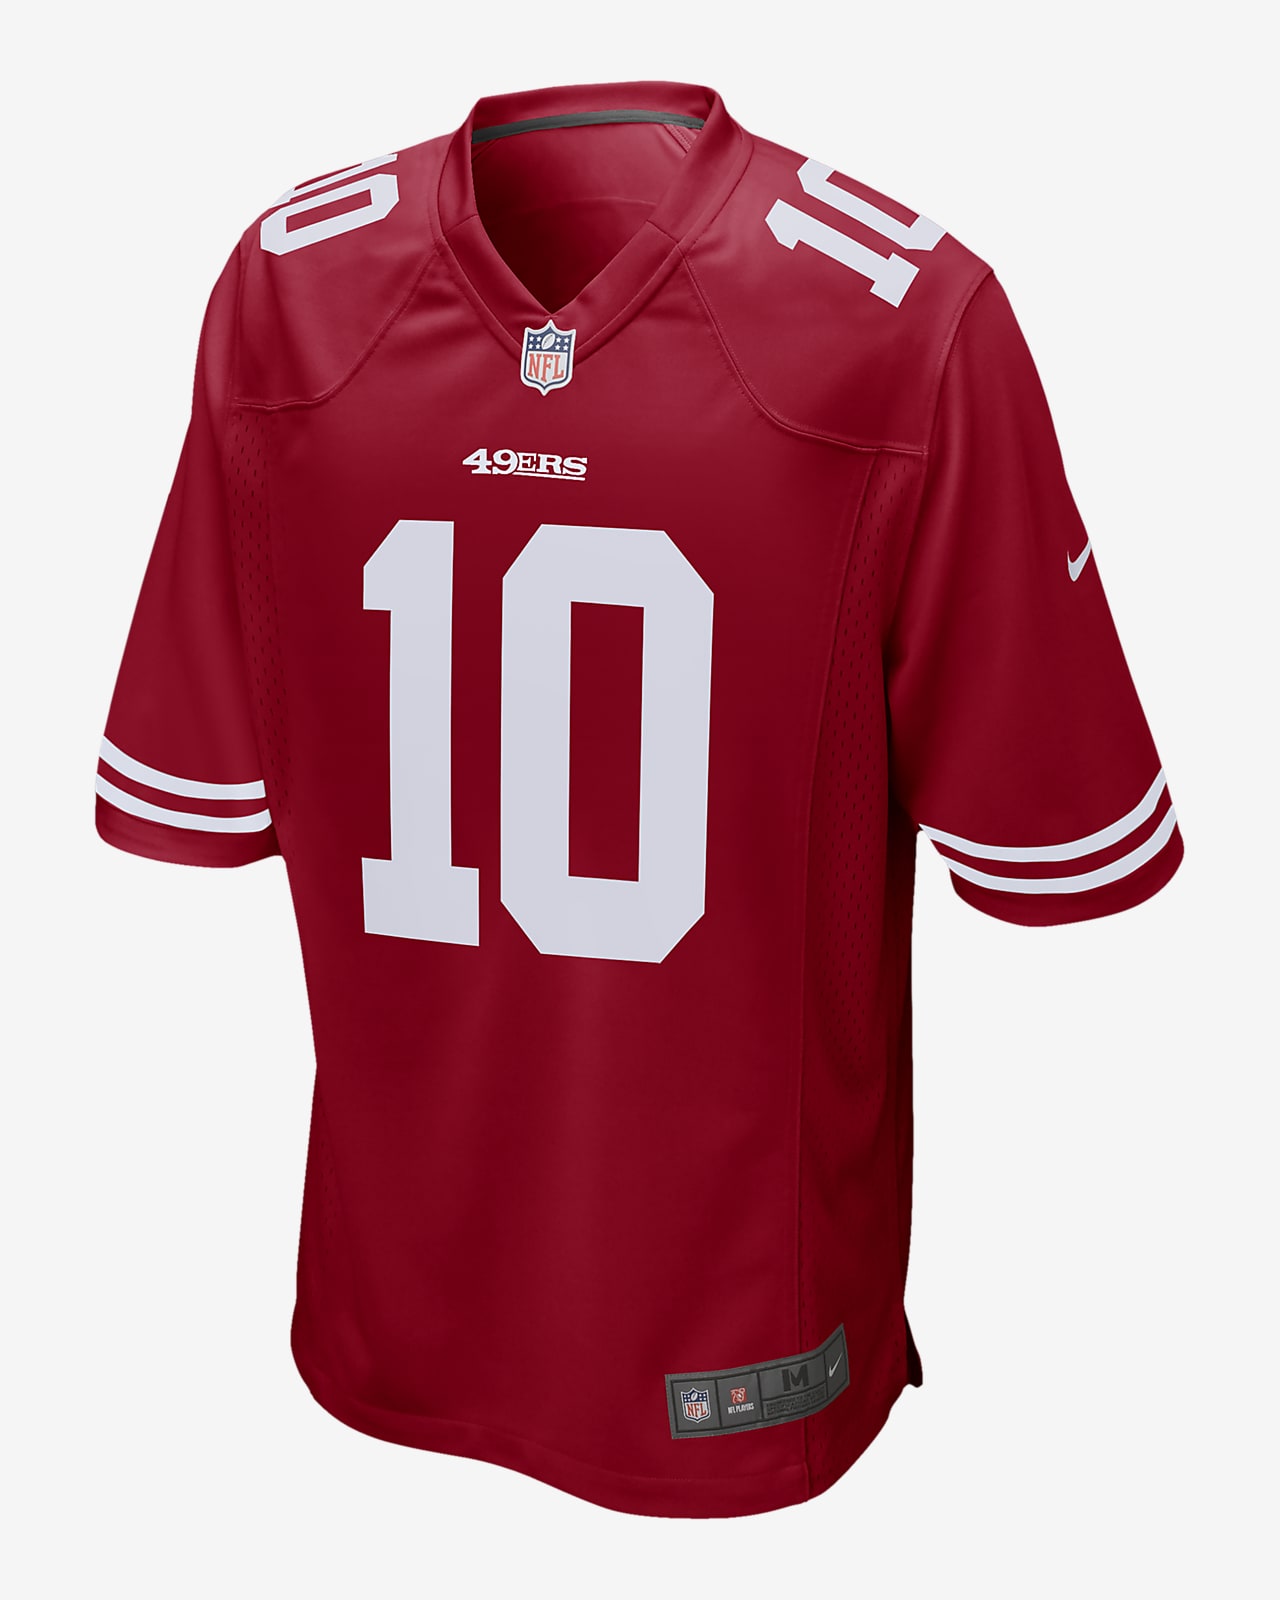 49ers jersey nfl